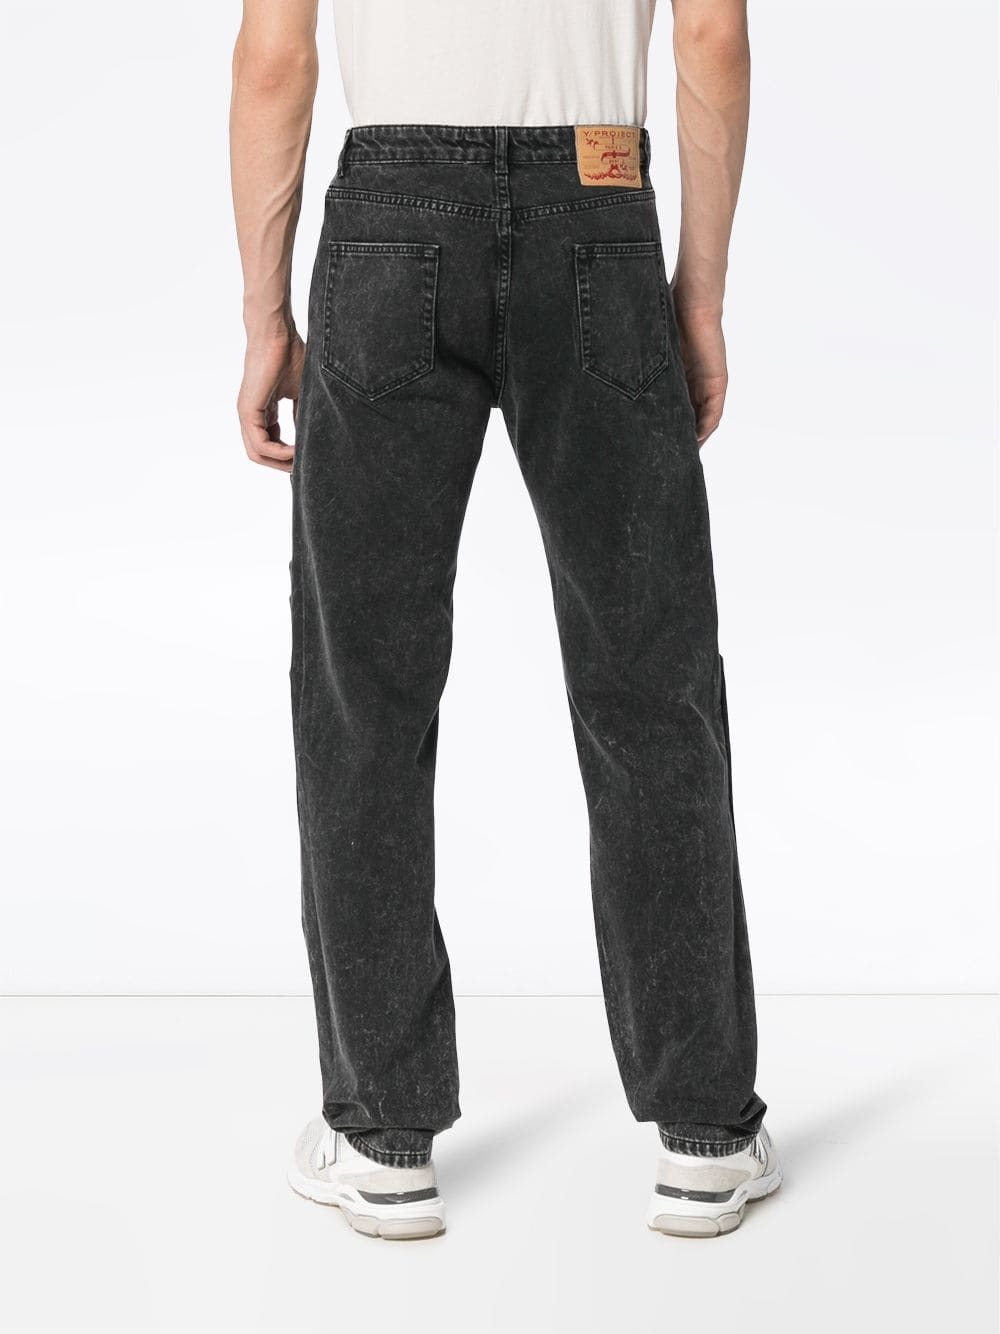 Y/Project Y Project Layered Denim Jeans, $300 | farfetch.com 